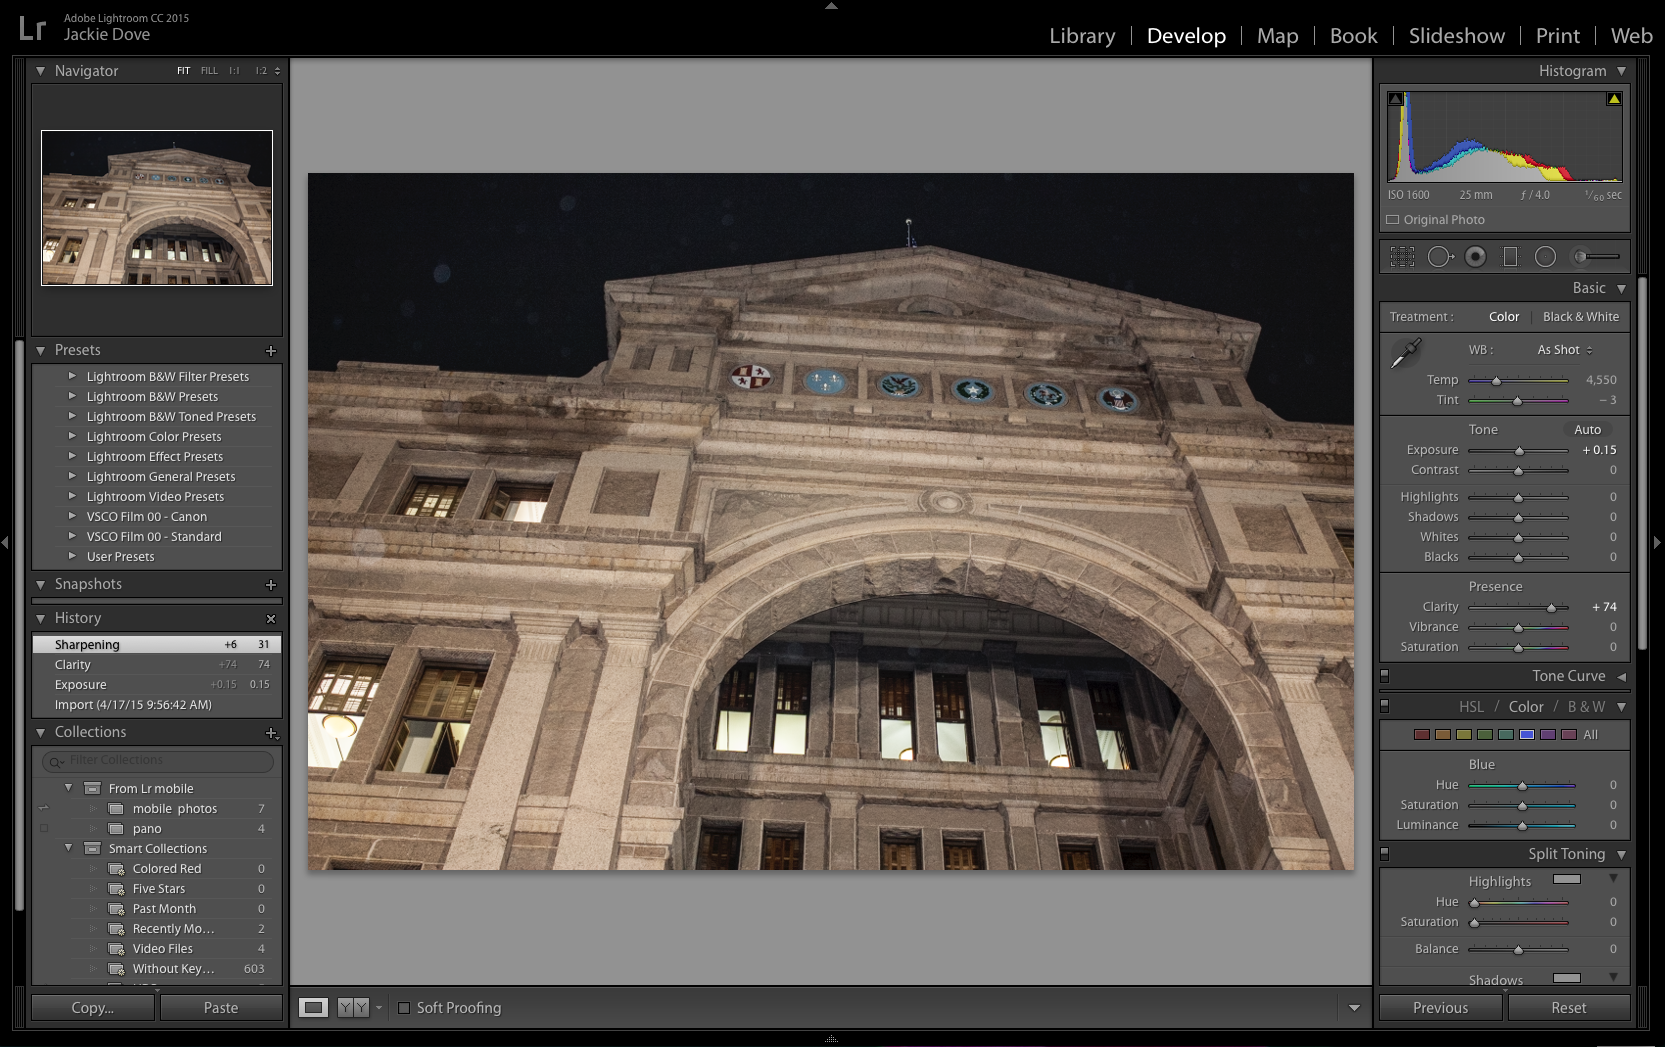 Adobe Lightroom Cs6 Free Download For Mac - westernsalon